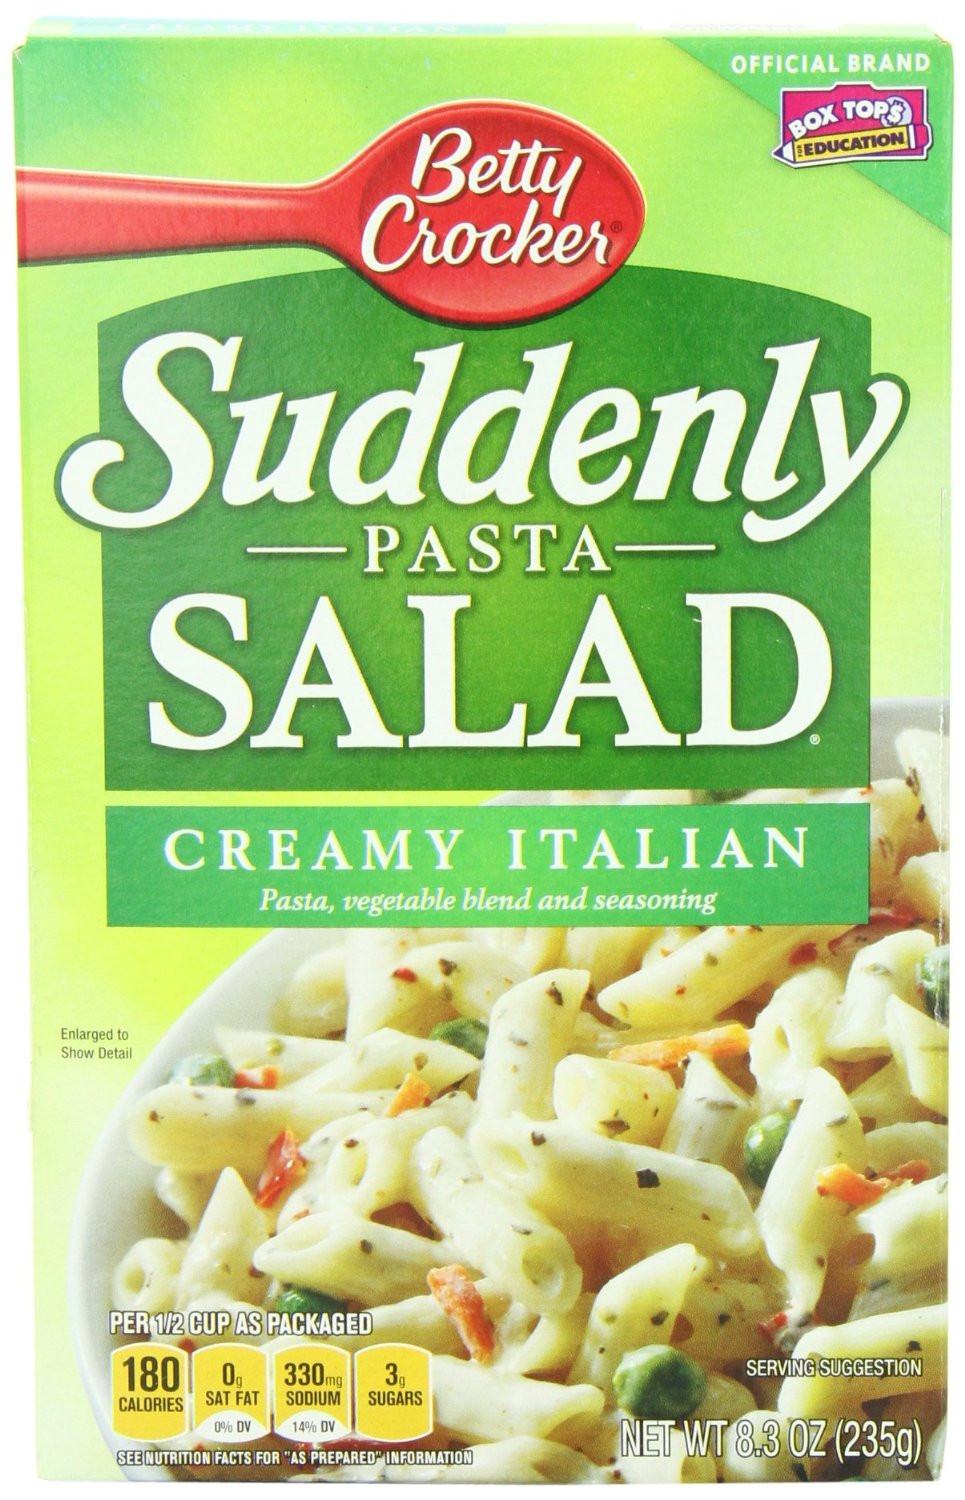 Suddenly Pasta Salad
 Betty Crocker Suddenly Pasta Salad Creamy Italian Salad $2